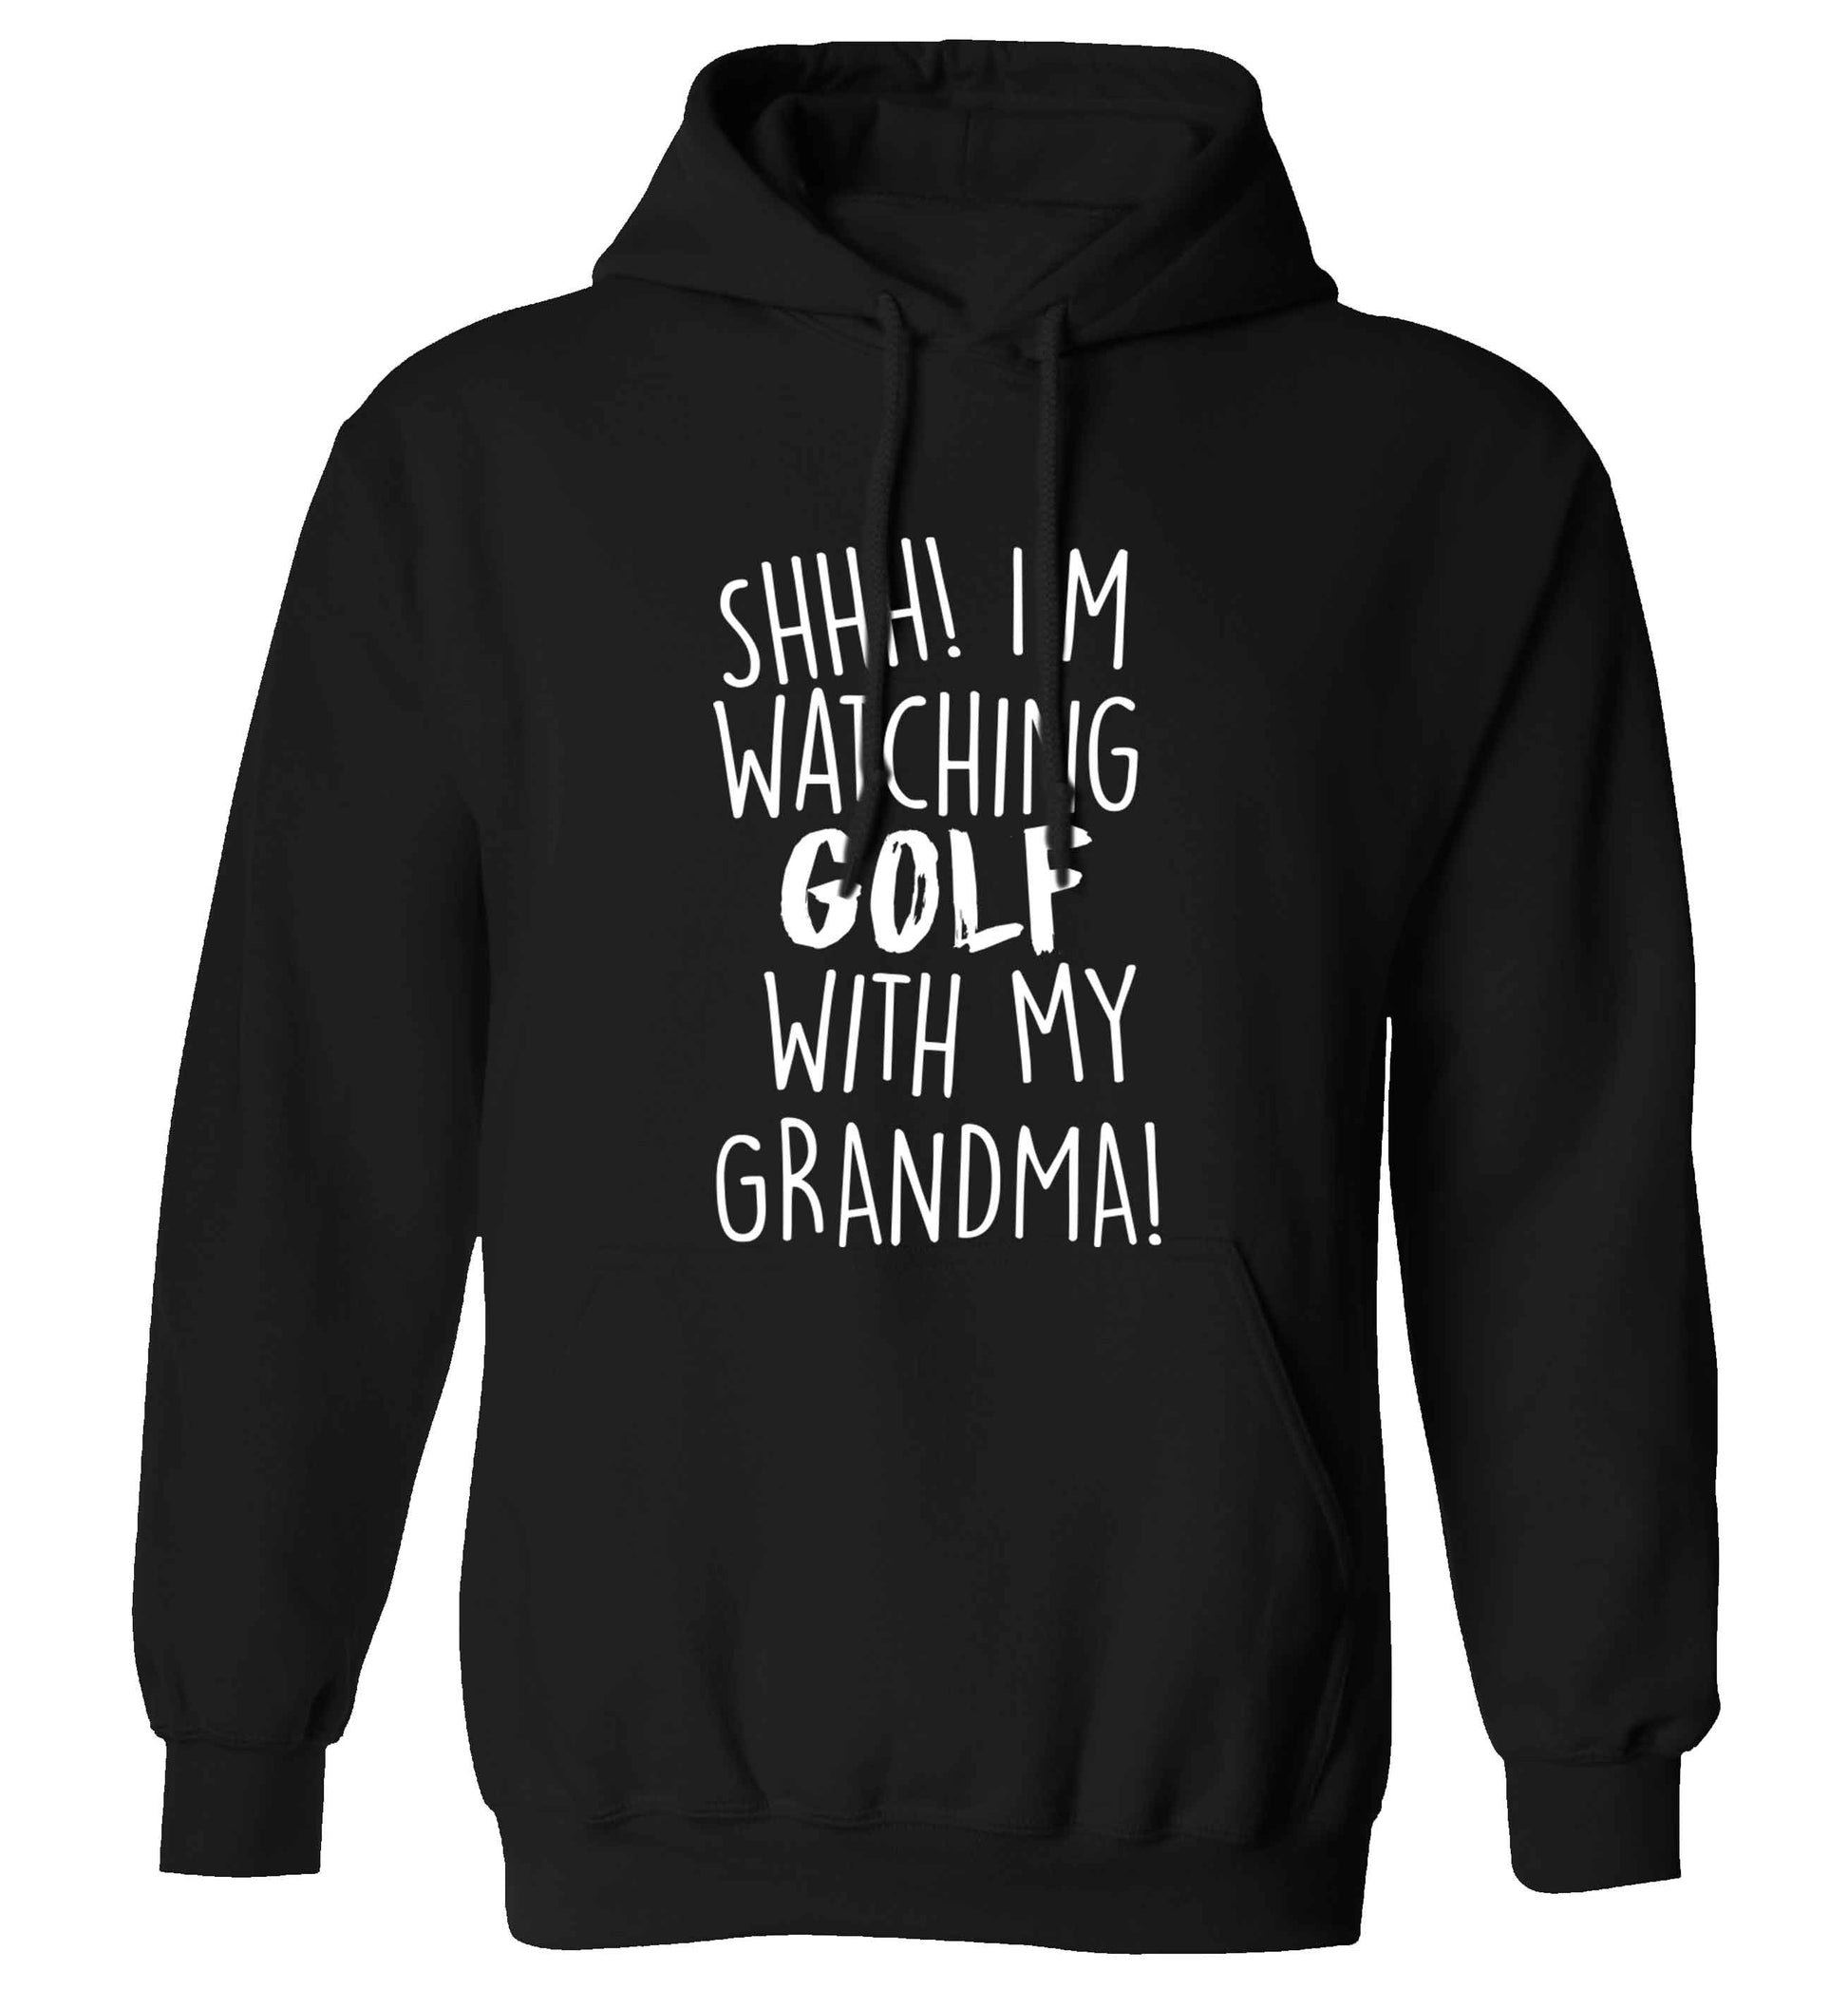 Shh I'm watching golf with my grandma adults unisex black hoodie 2XL